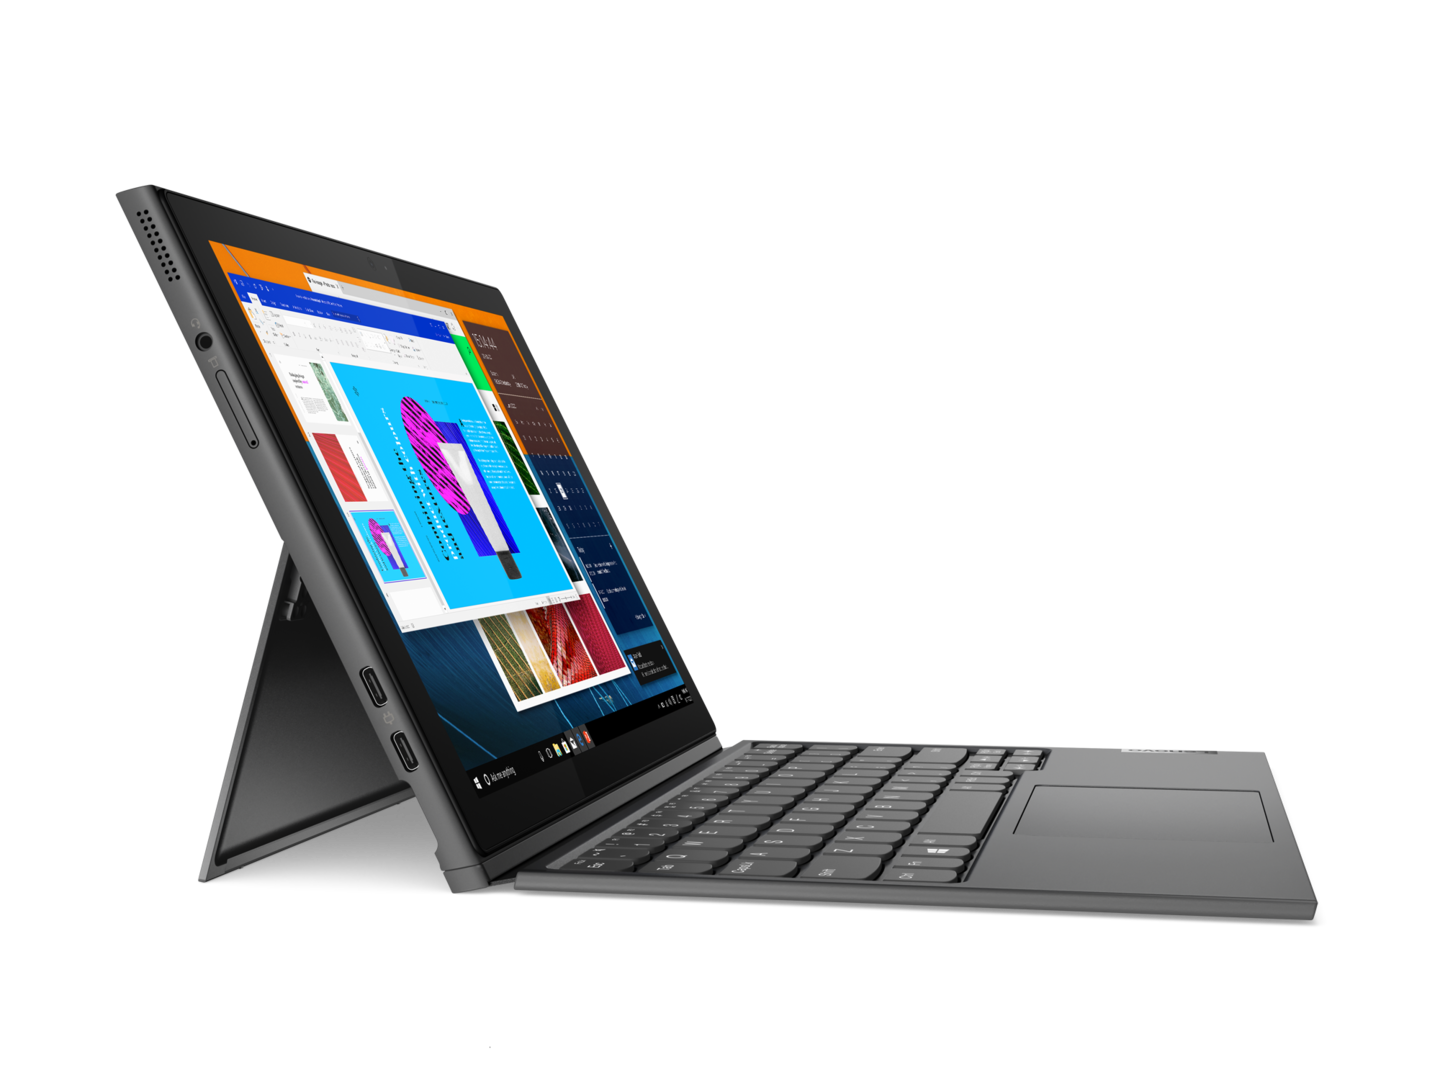 Lenovo Duet: Yoga and IdeaPad detachable 2-in-1 tablets announced